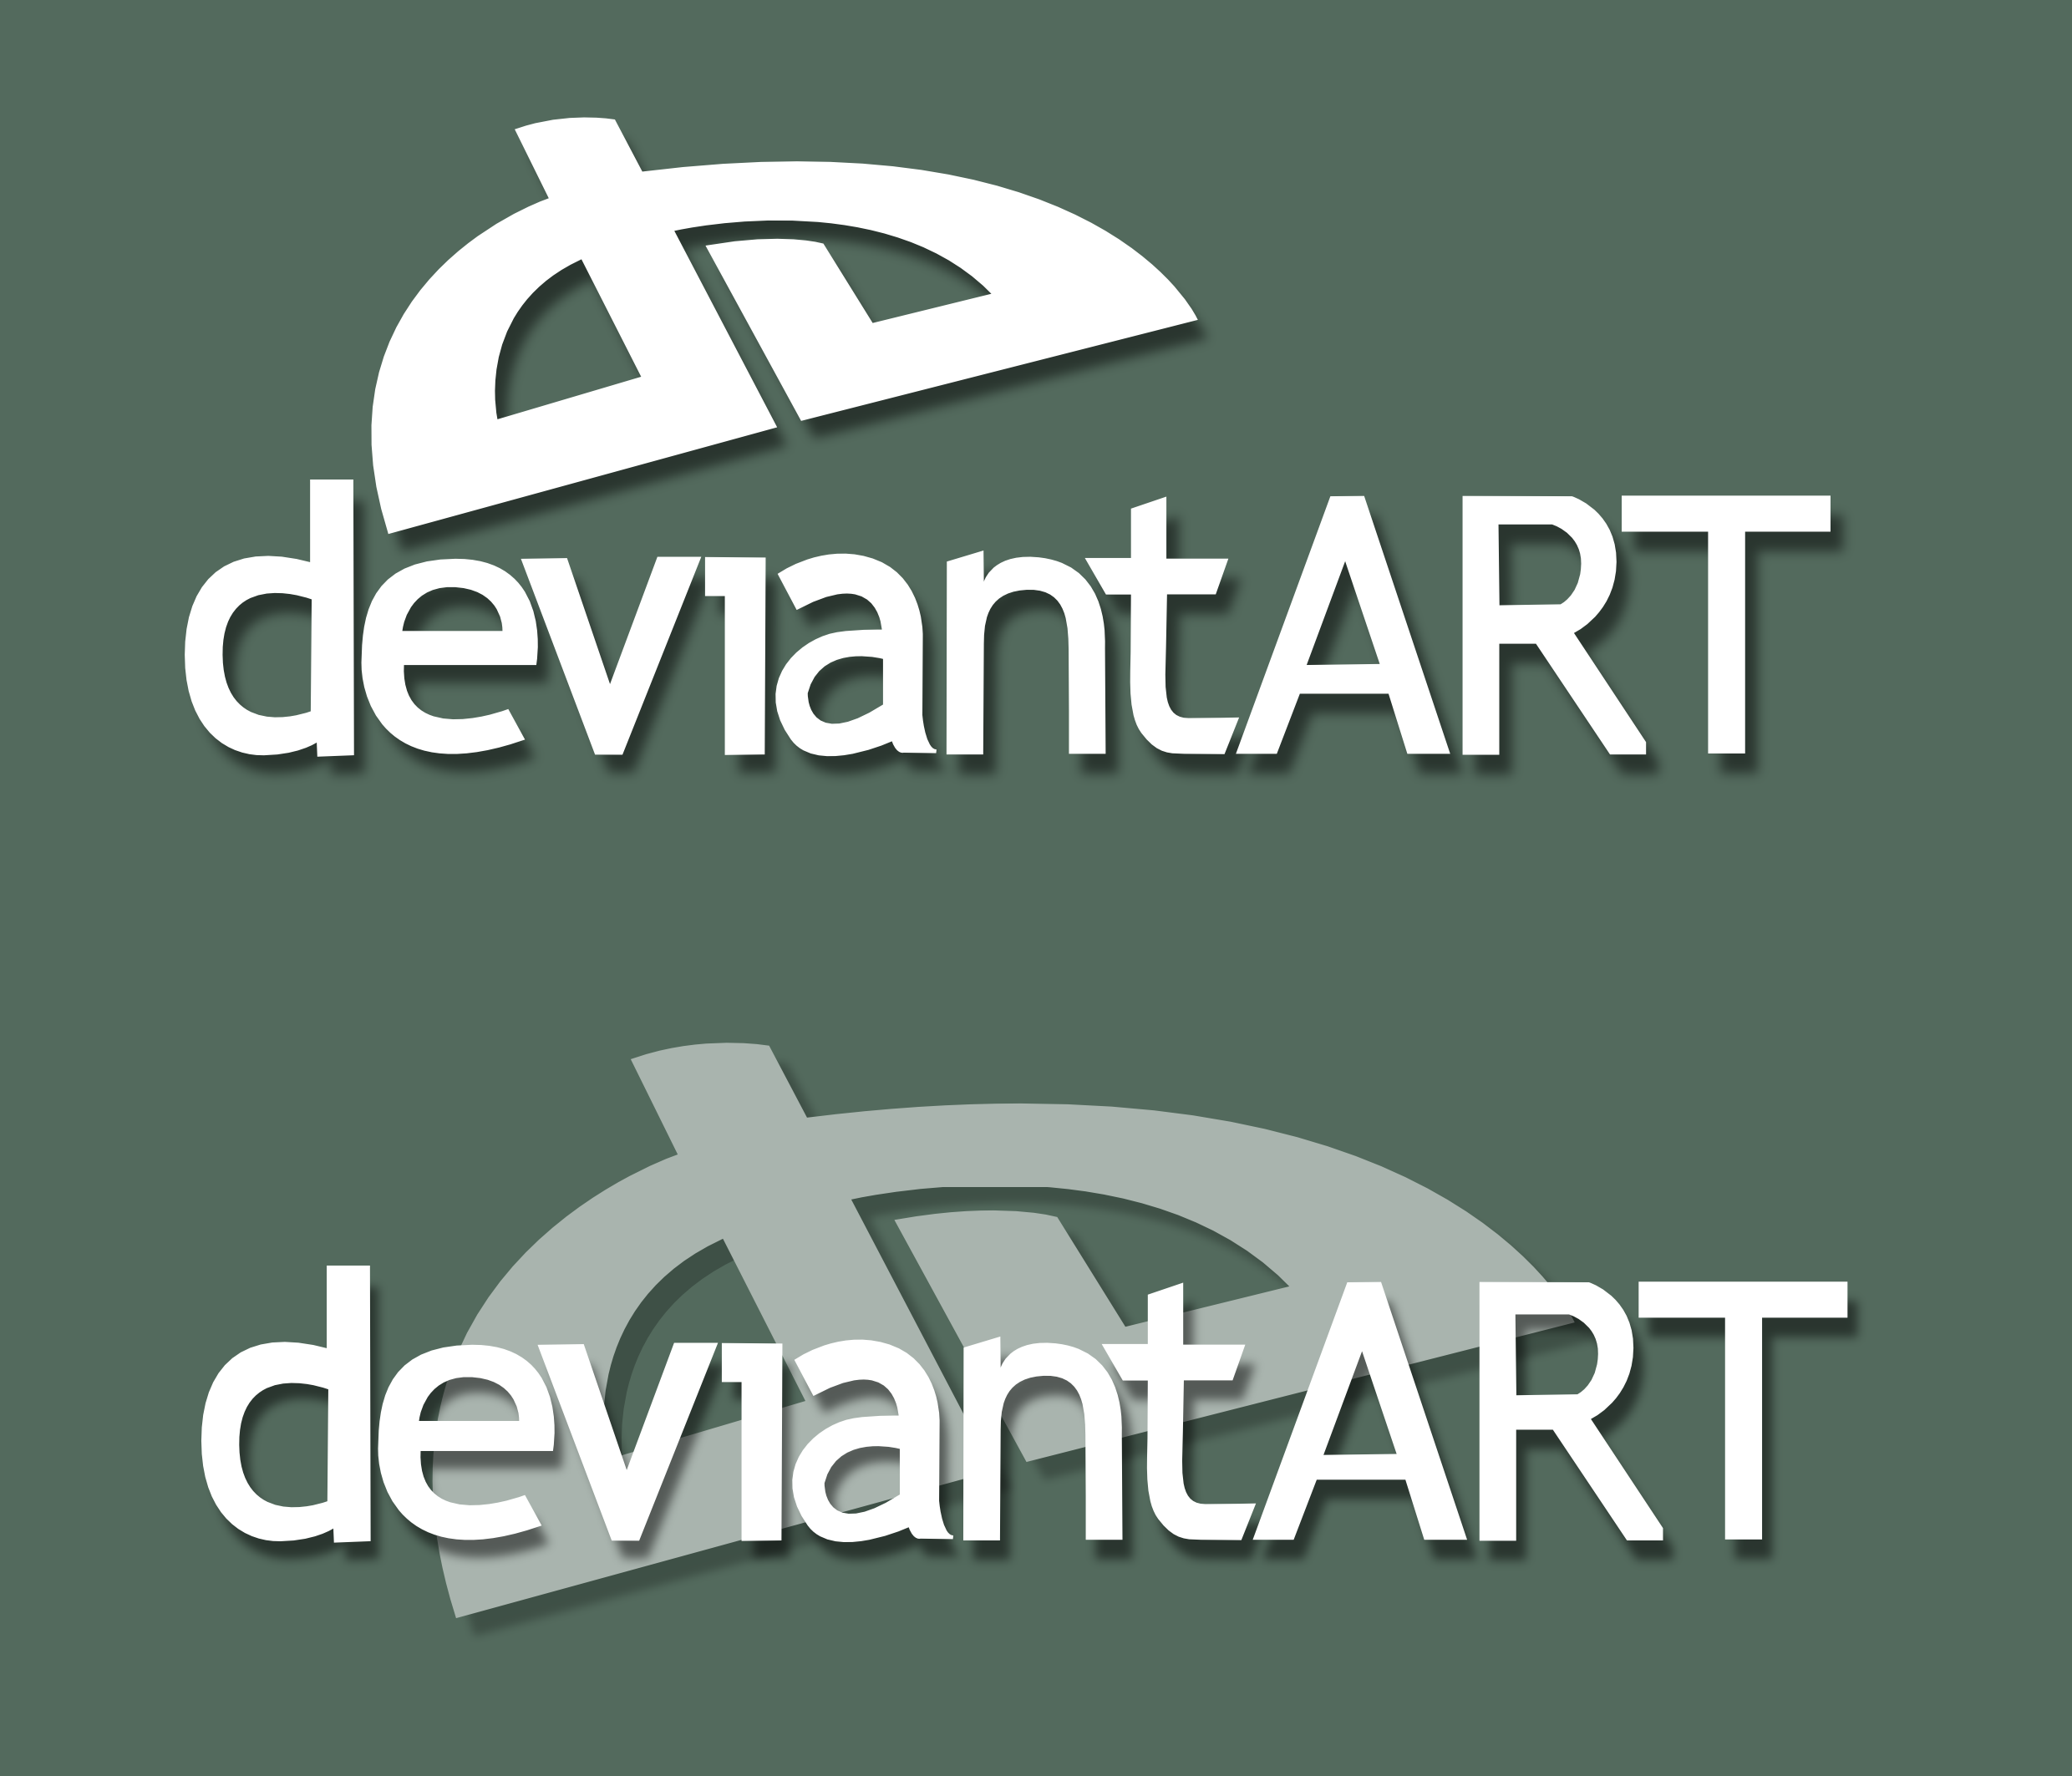 Deviantart Logo Vector PNG - 35071